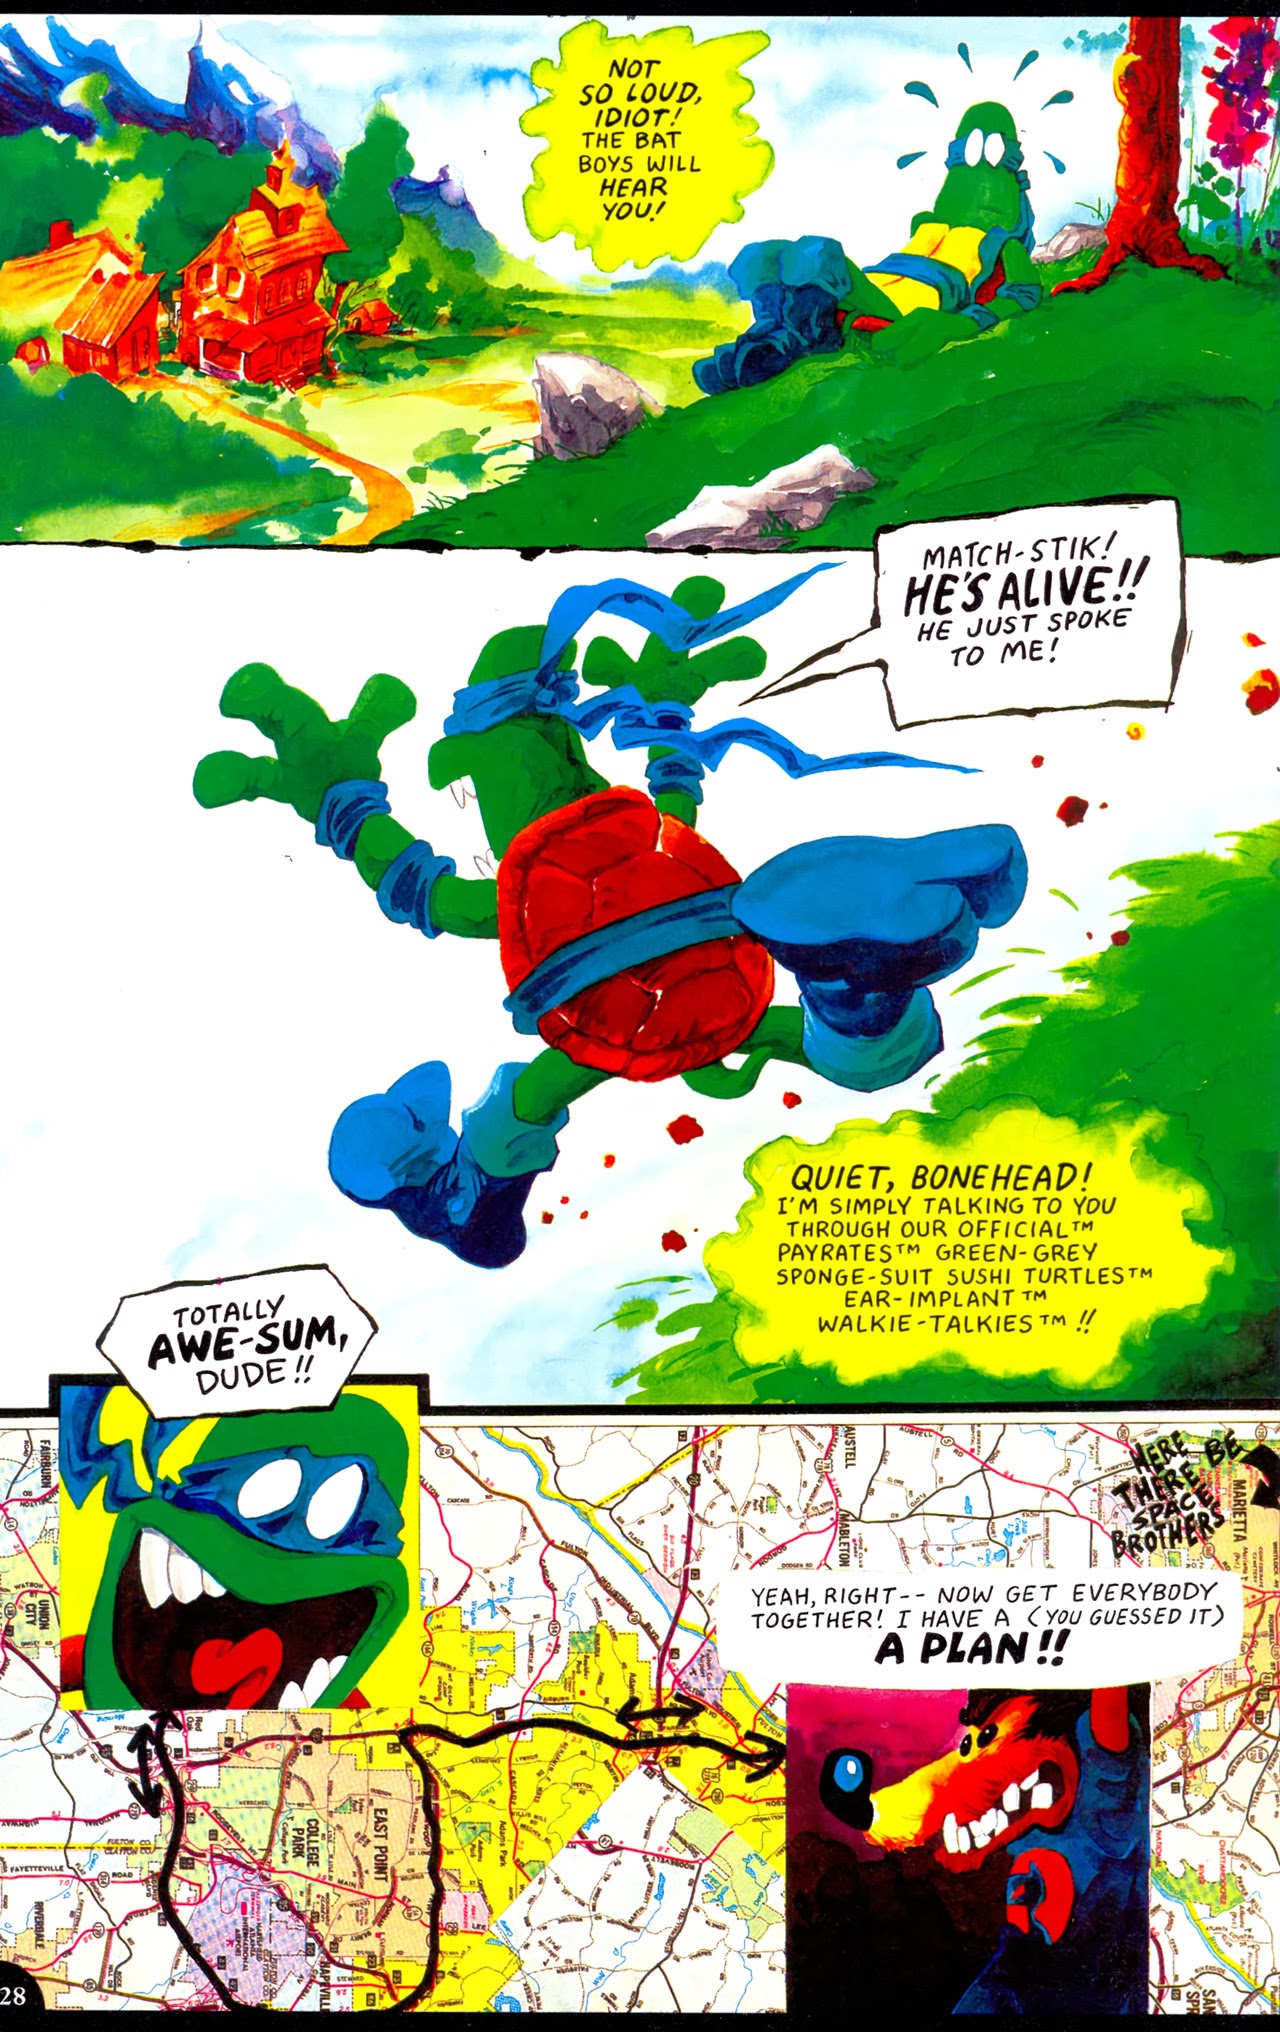 Read online Green-Grey Sponge-Suit Sushi Turtles comic -  Issue # Full - 30